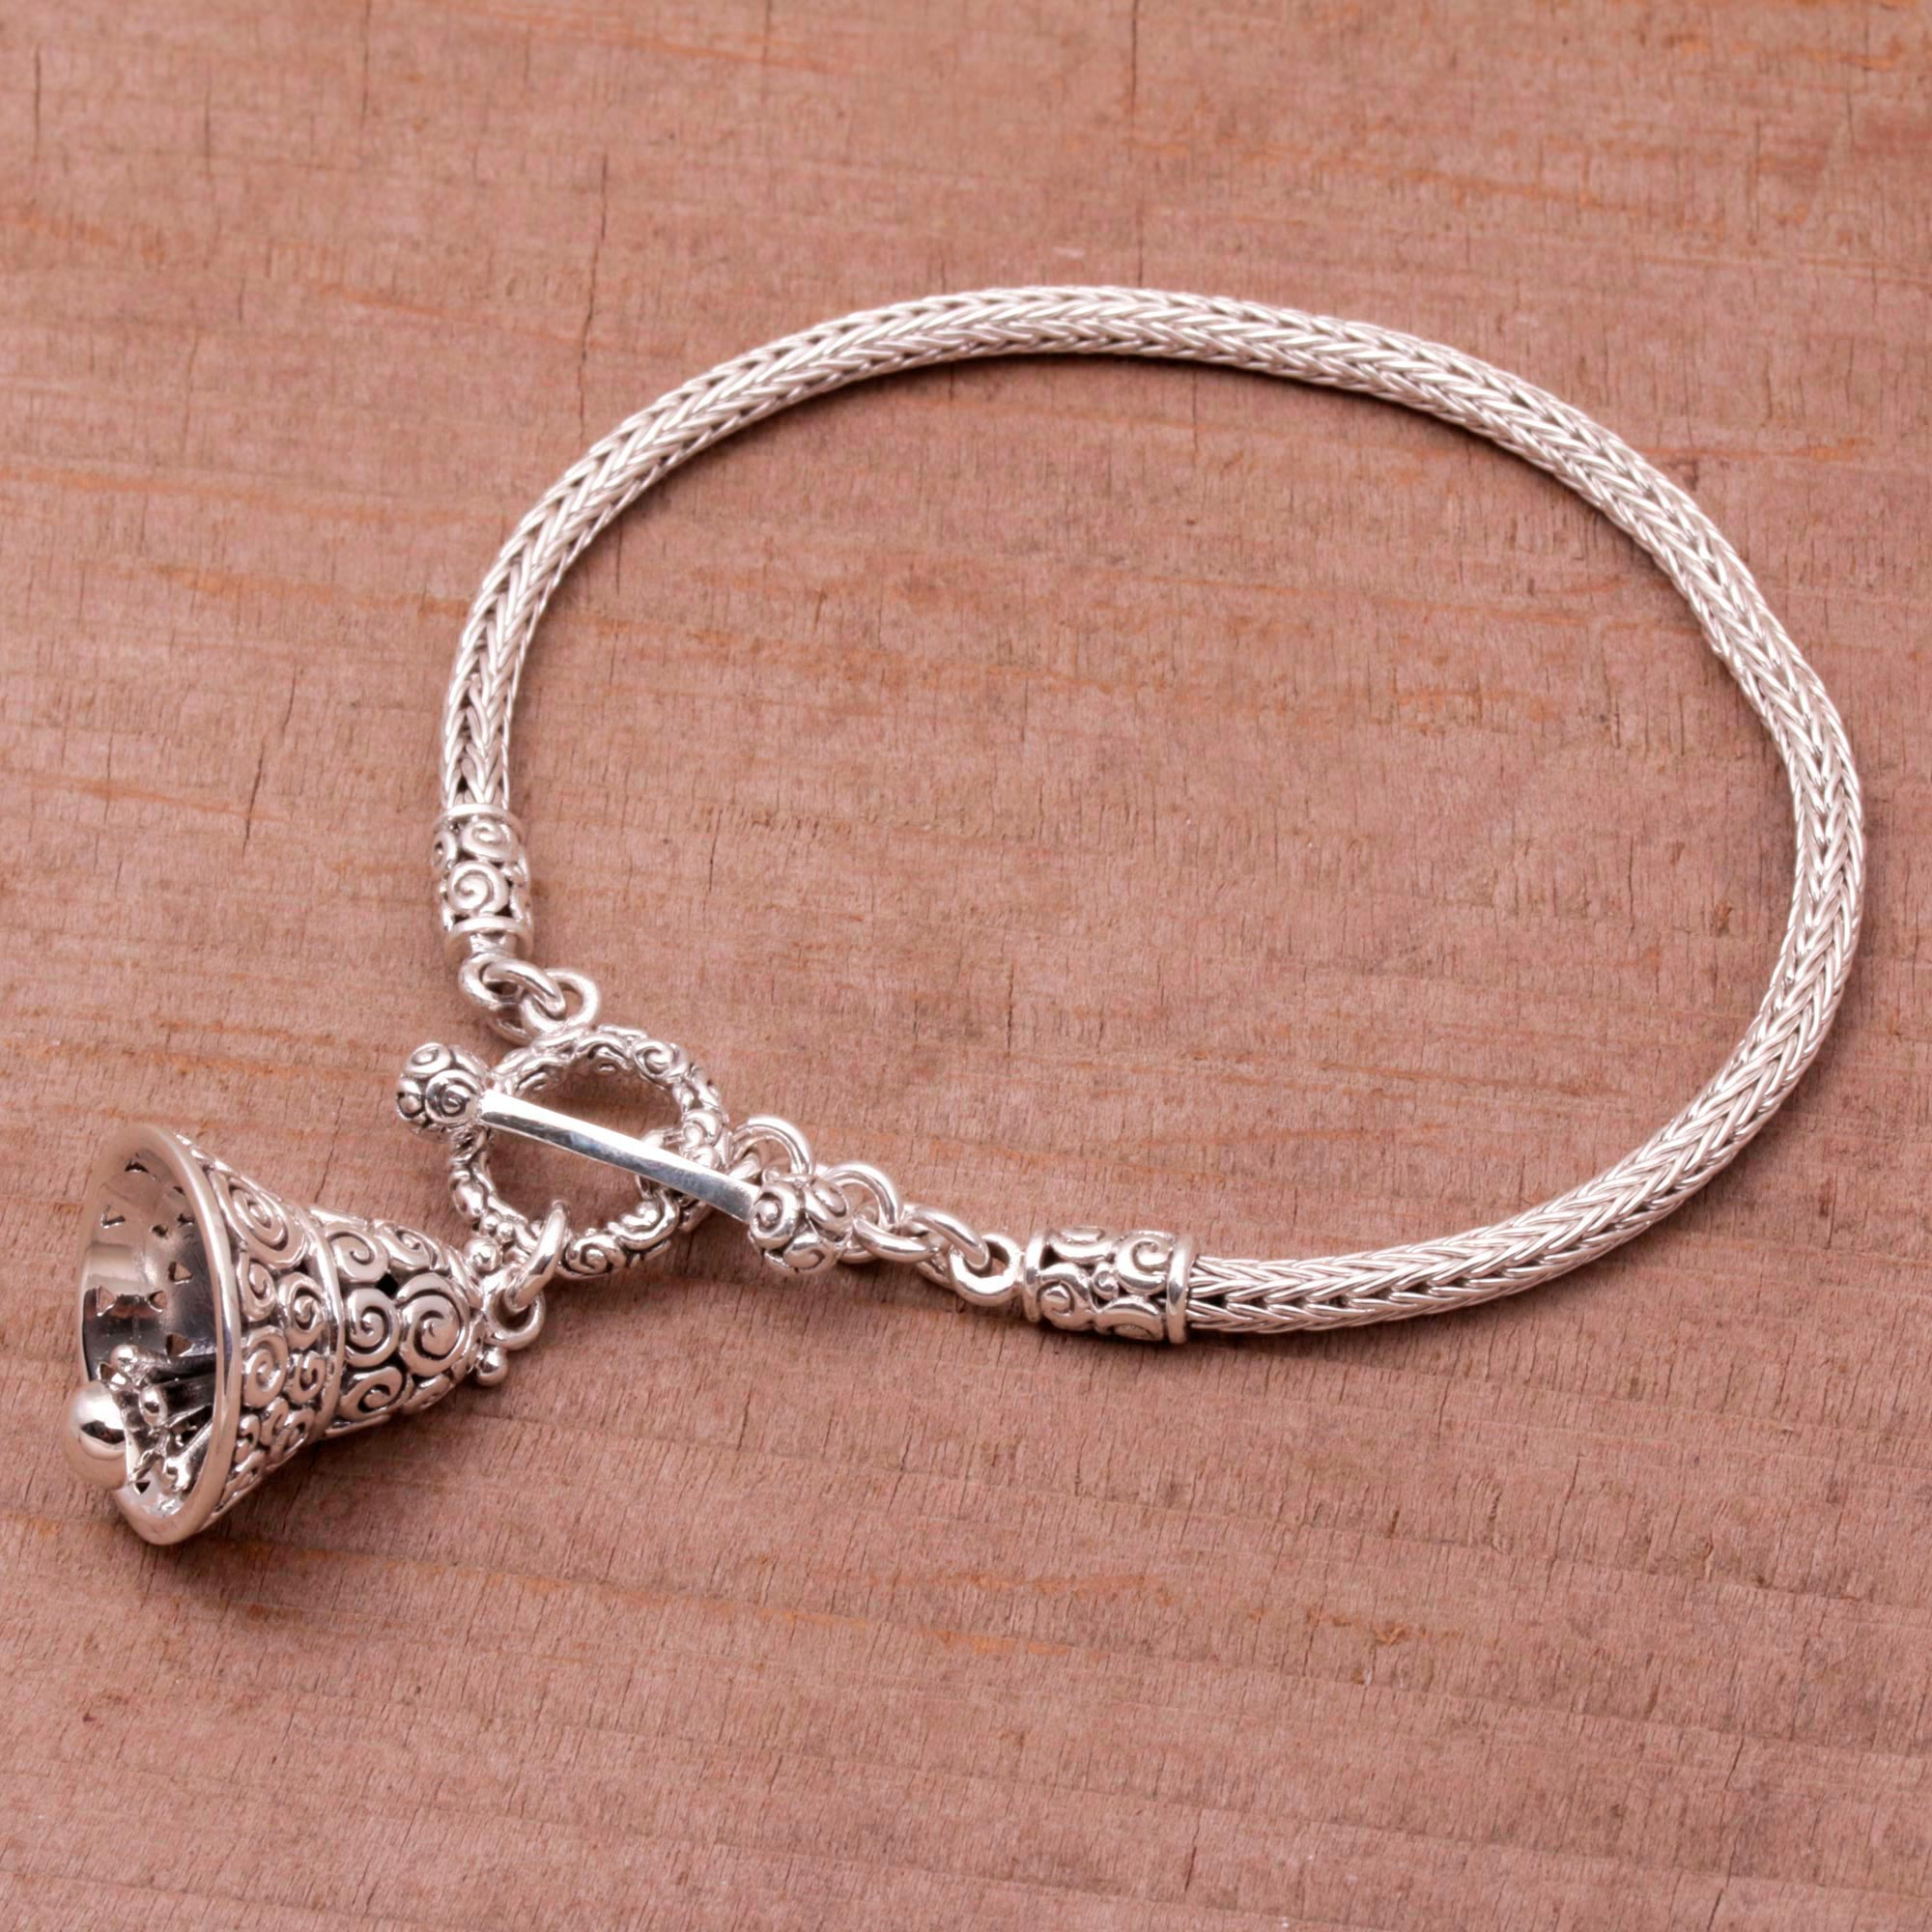 sterling silver charm bracelet